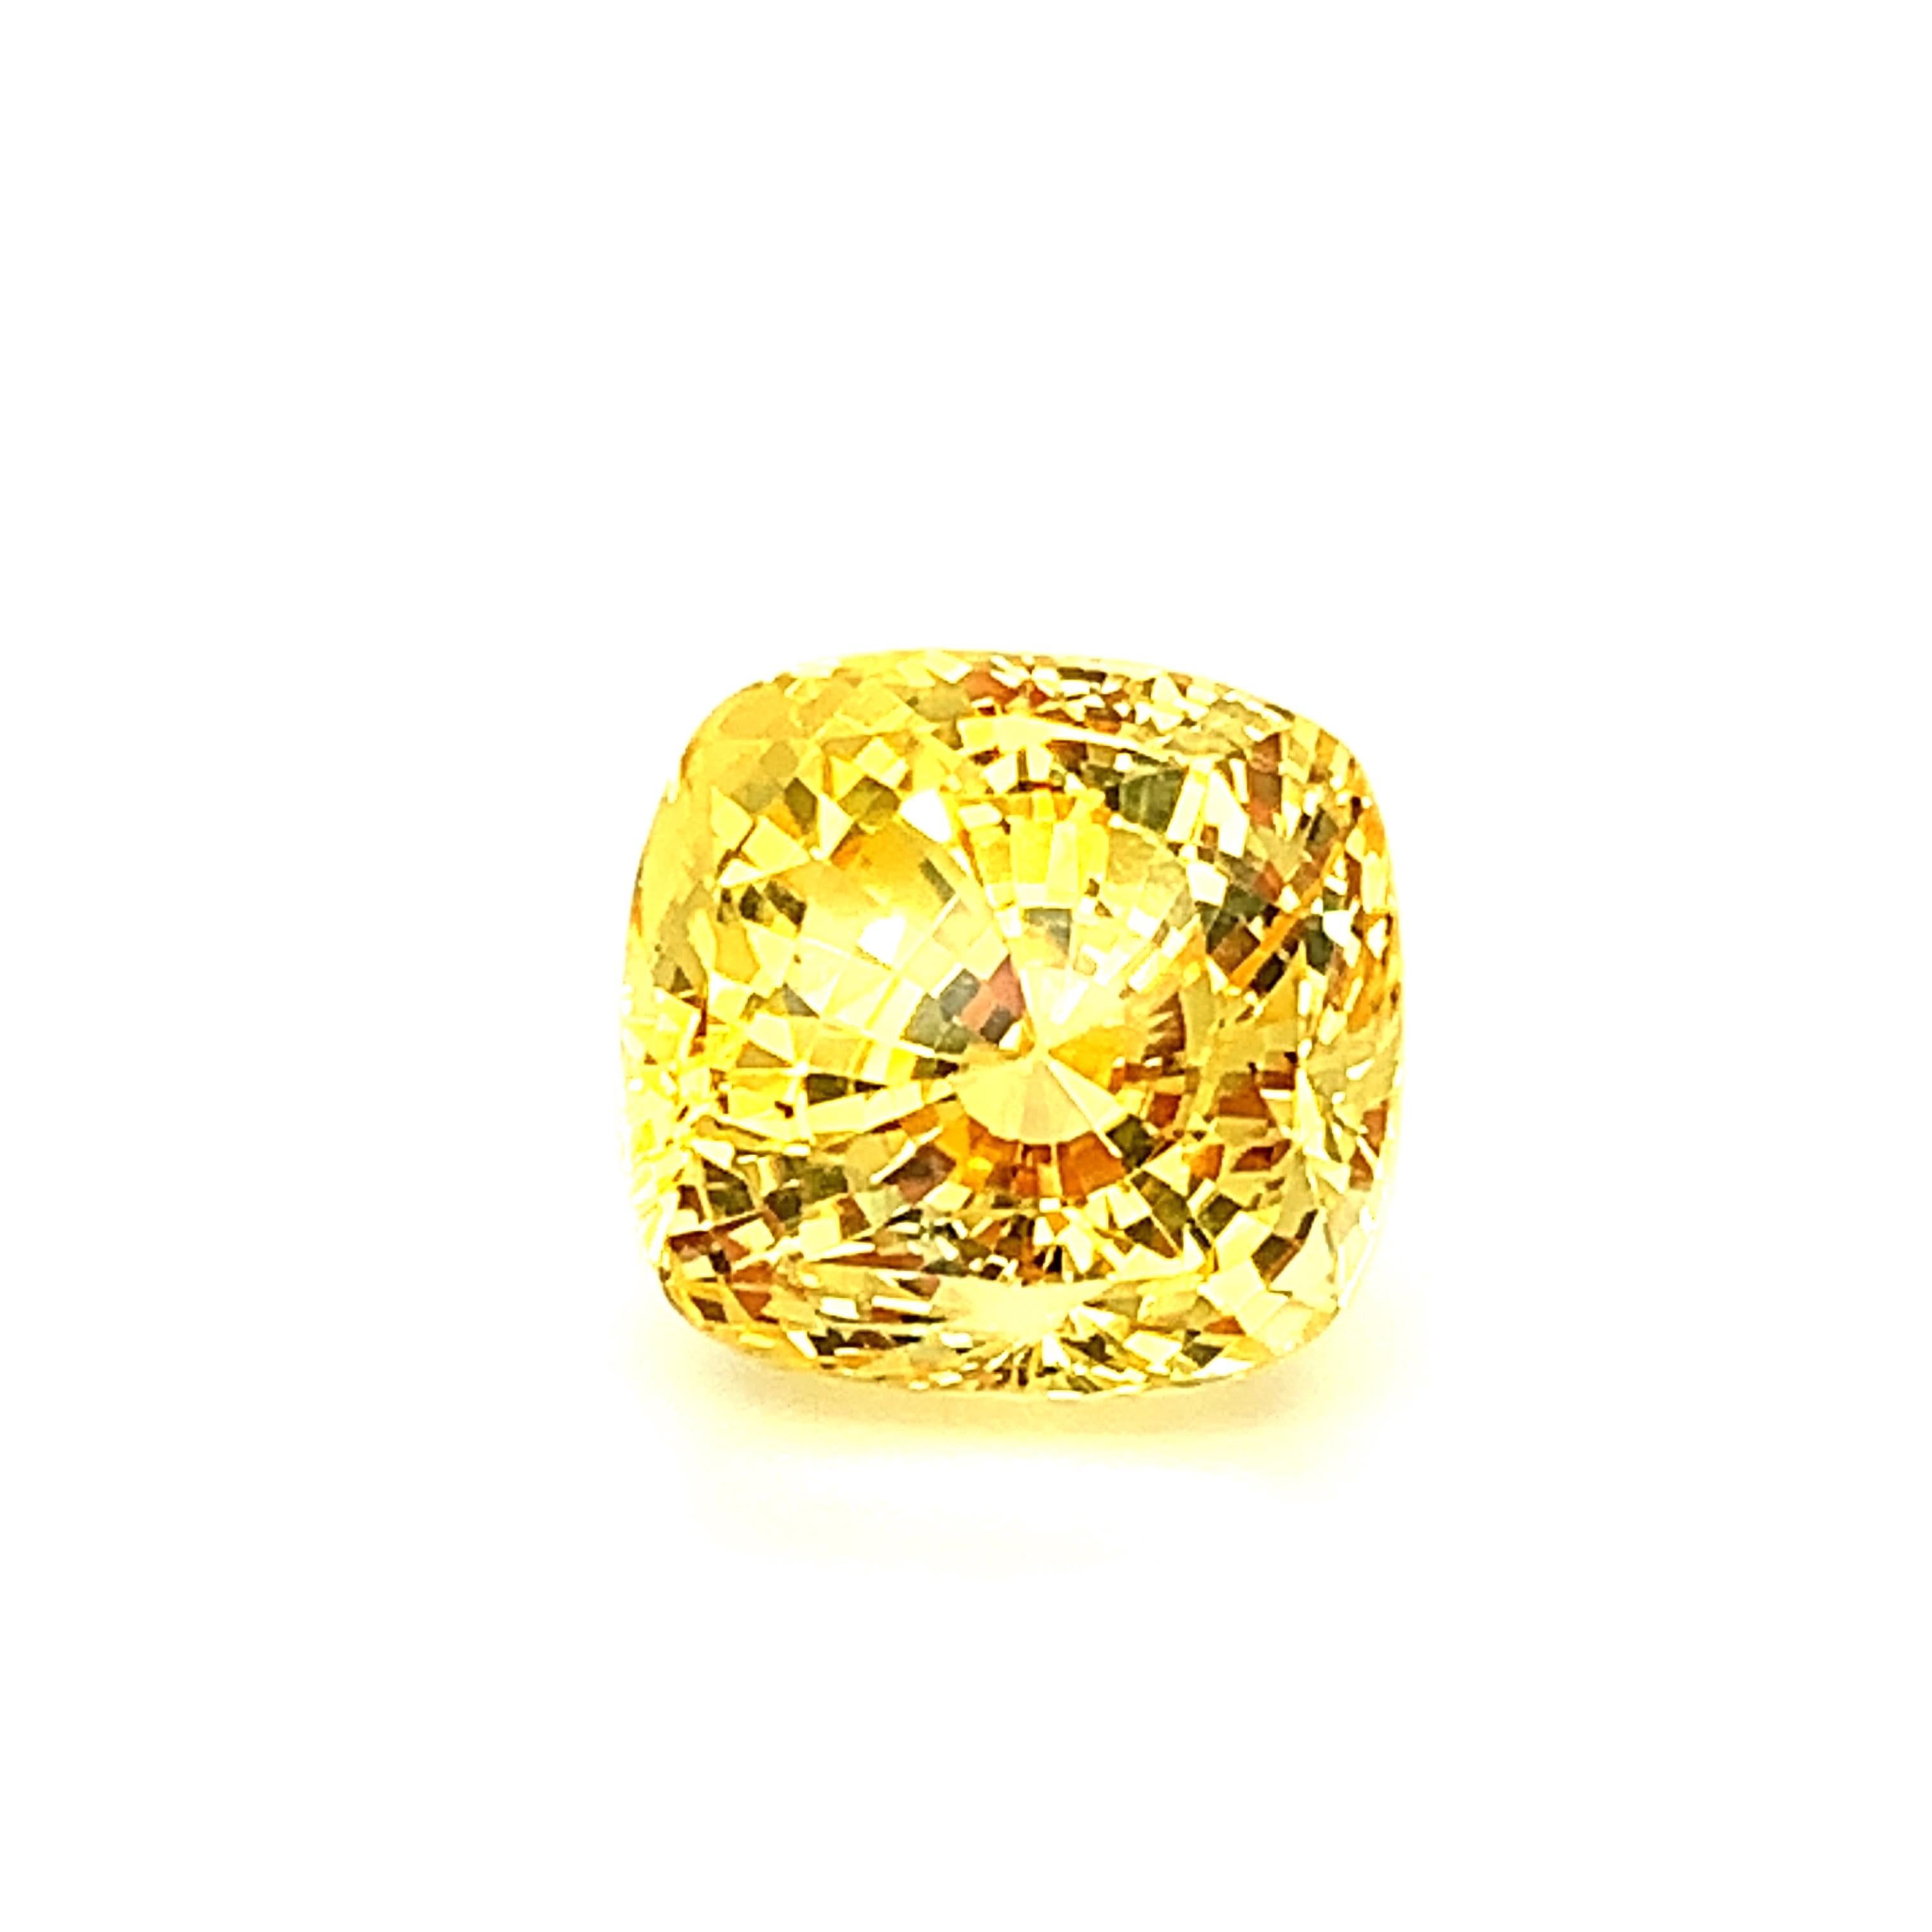 Unheated 10.78 Carat Ceylon Yellow Sapphire, Loose Gemstone, GIA Certified For Sale 1